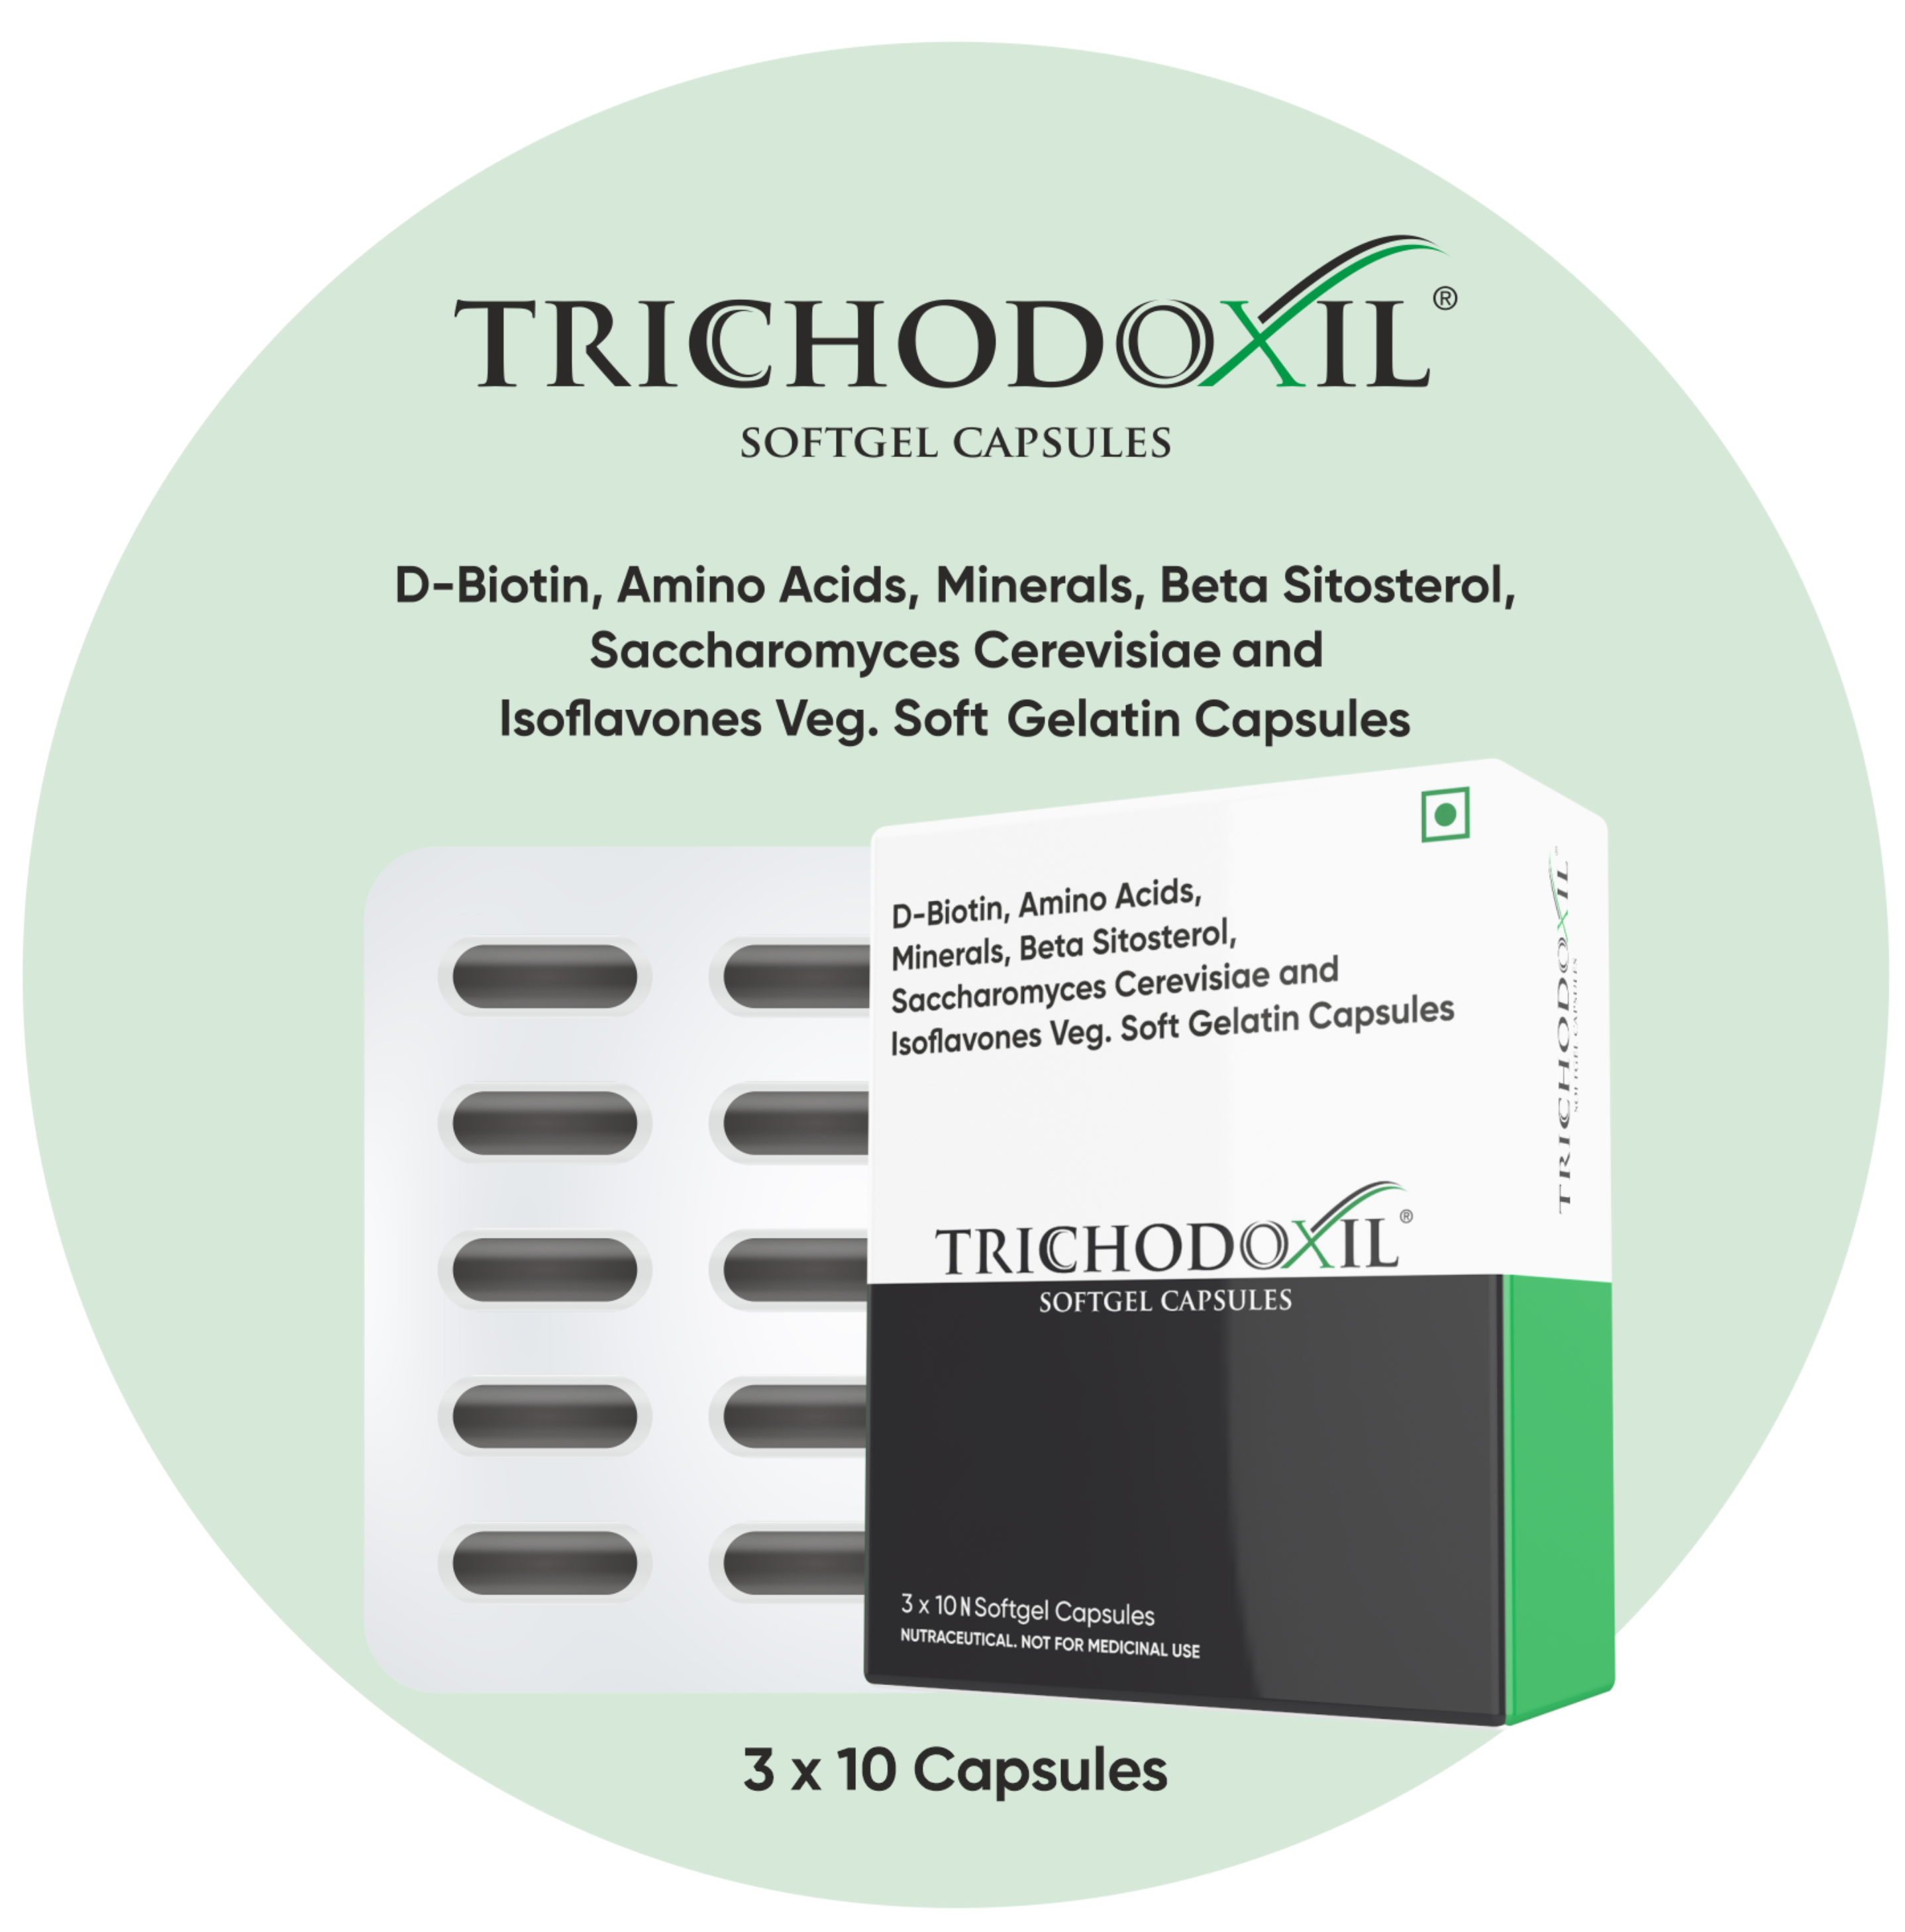 TRICHODOXIL SOFTGEL CAPSULES